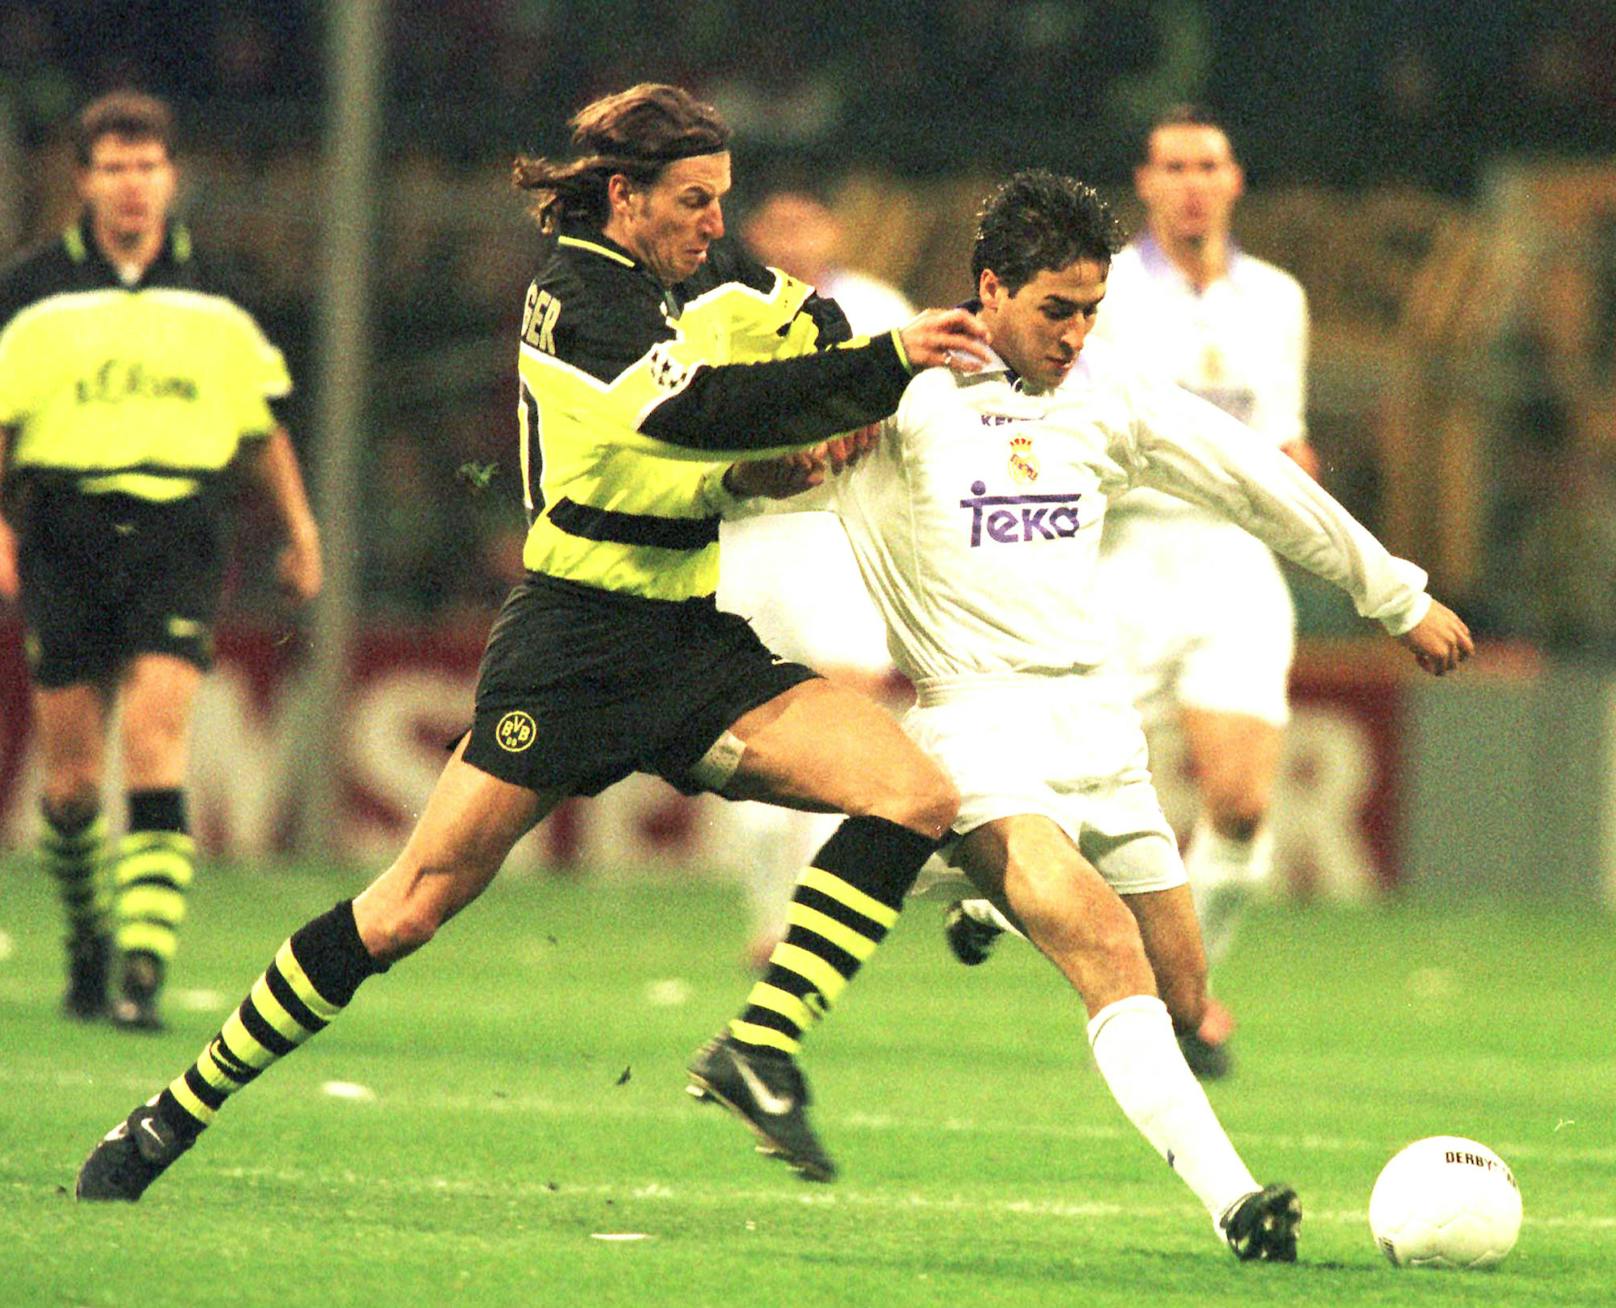 <strong>Wolfgang Feiersinger:</strong>&nbsp;Einer der letzten Liberos bei Borussia Dortmund. Gewann 1997 die Champions League, den Weltpokal und den deutschen Superpokal. Bestritt insgesamt 83 Partien für den BVB.&nbsp;&nbsp;